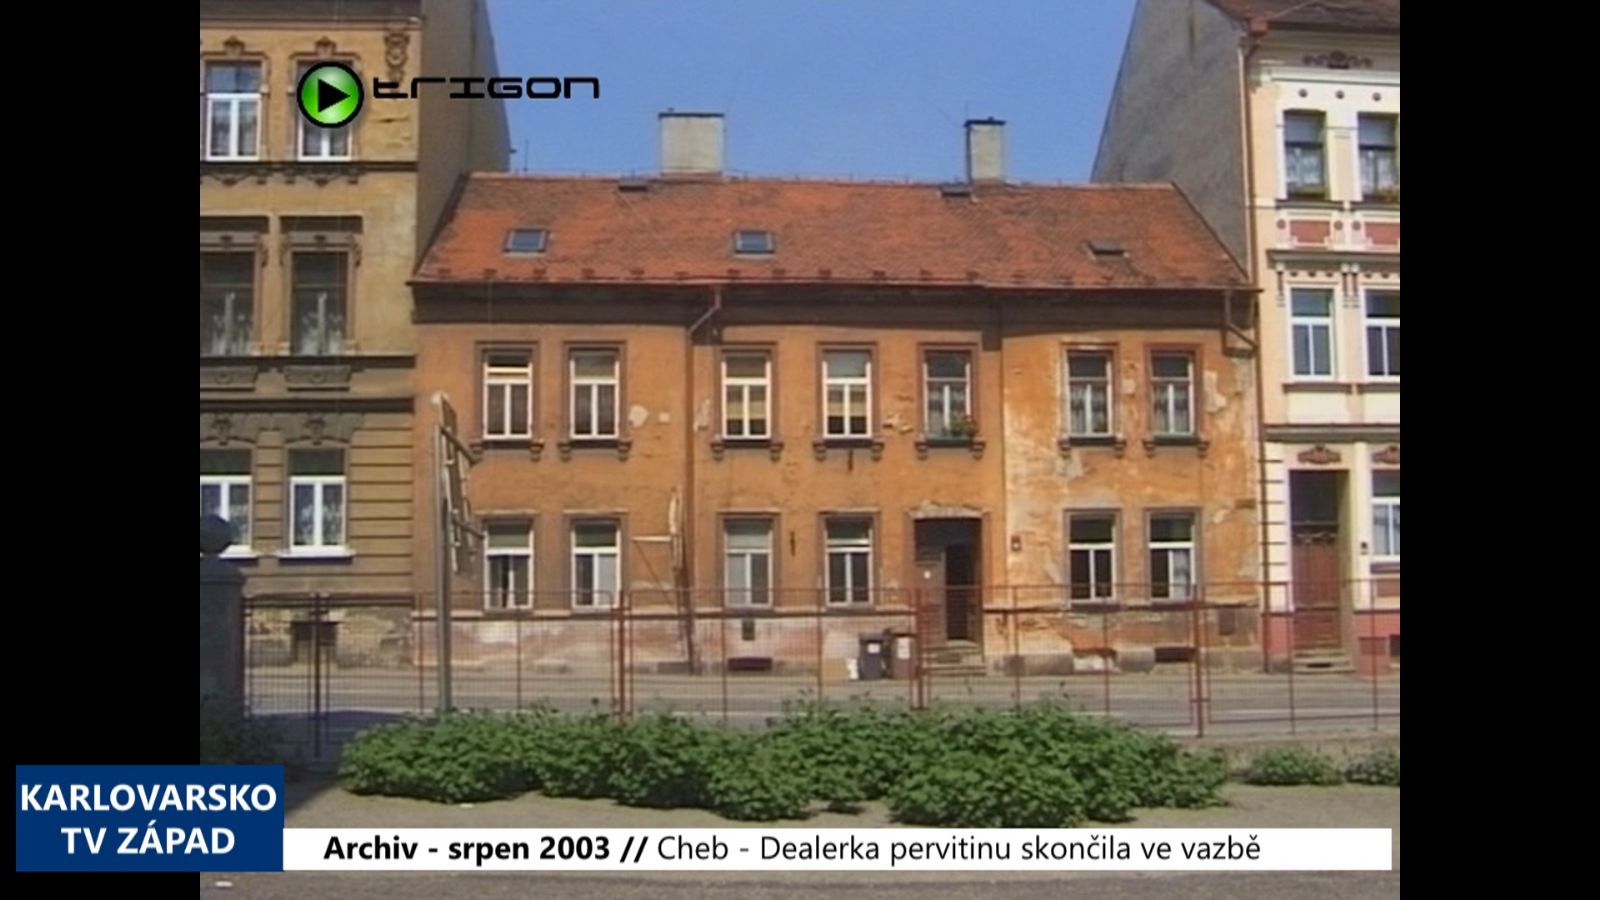  2003 – Cheb: Dealerka pervitinu skončila ve vazbě (TV Západ)